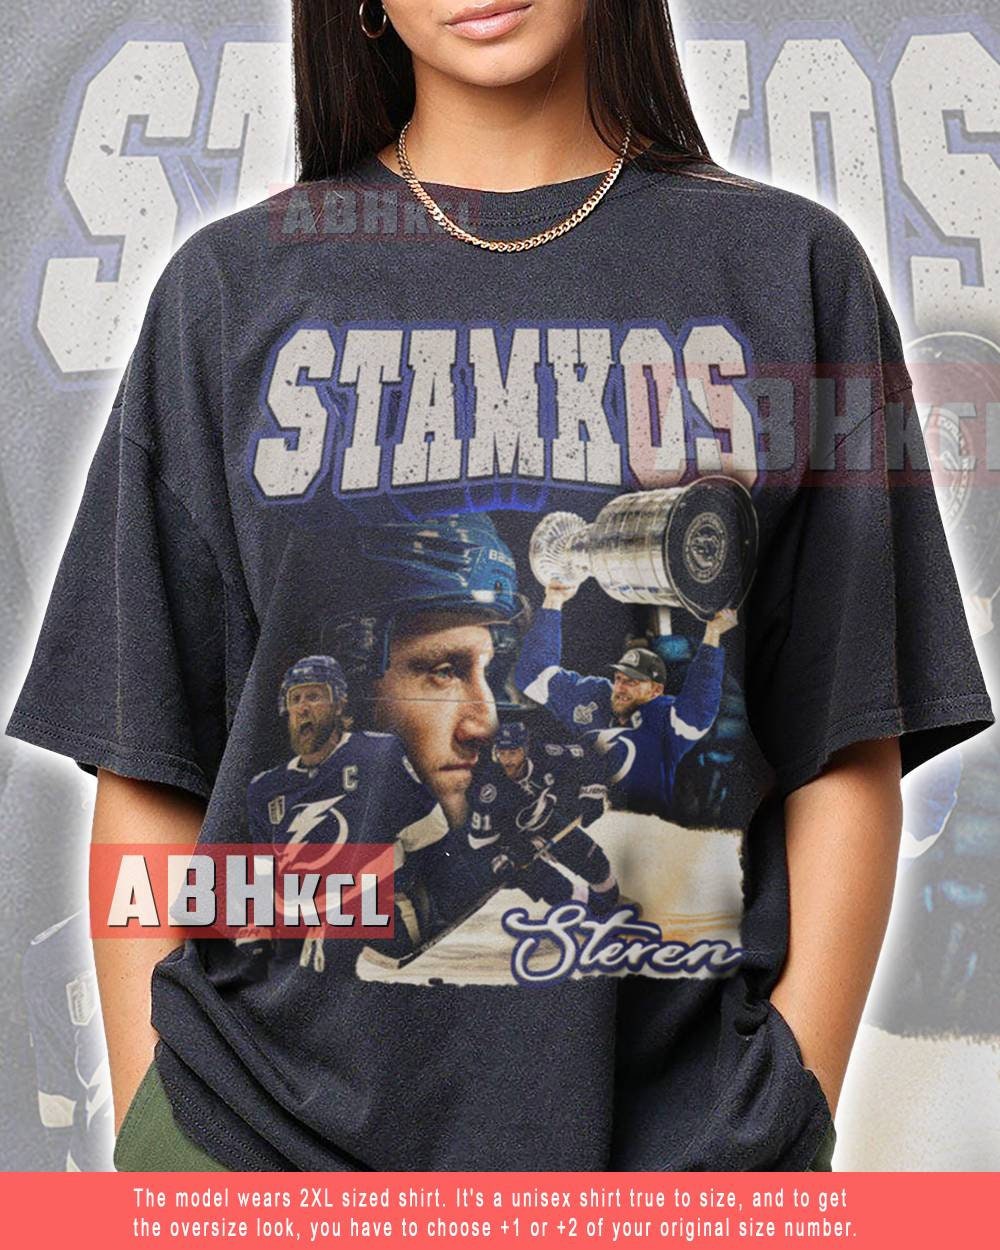 Steven Stamkos - Stammer Time - Tampa Bay Hockey T-Shirt